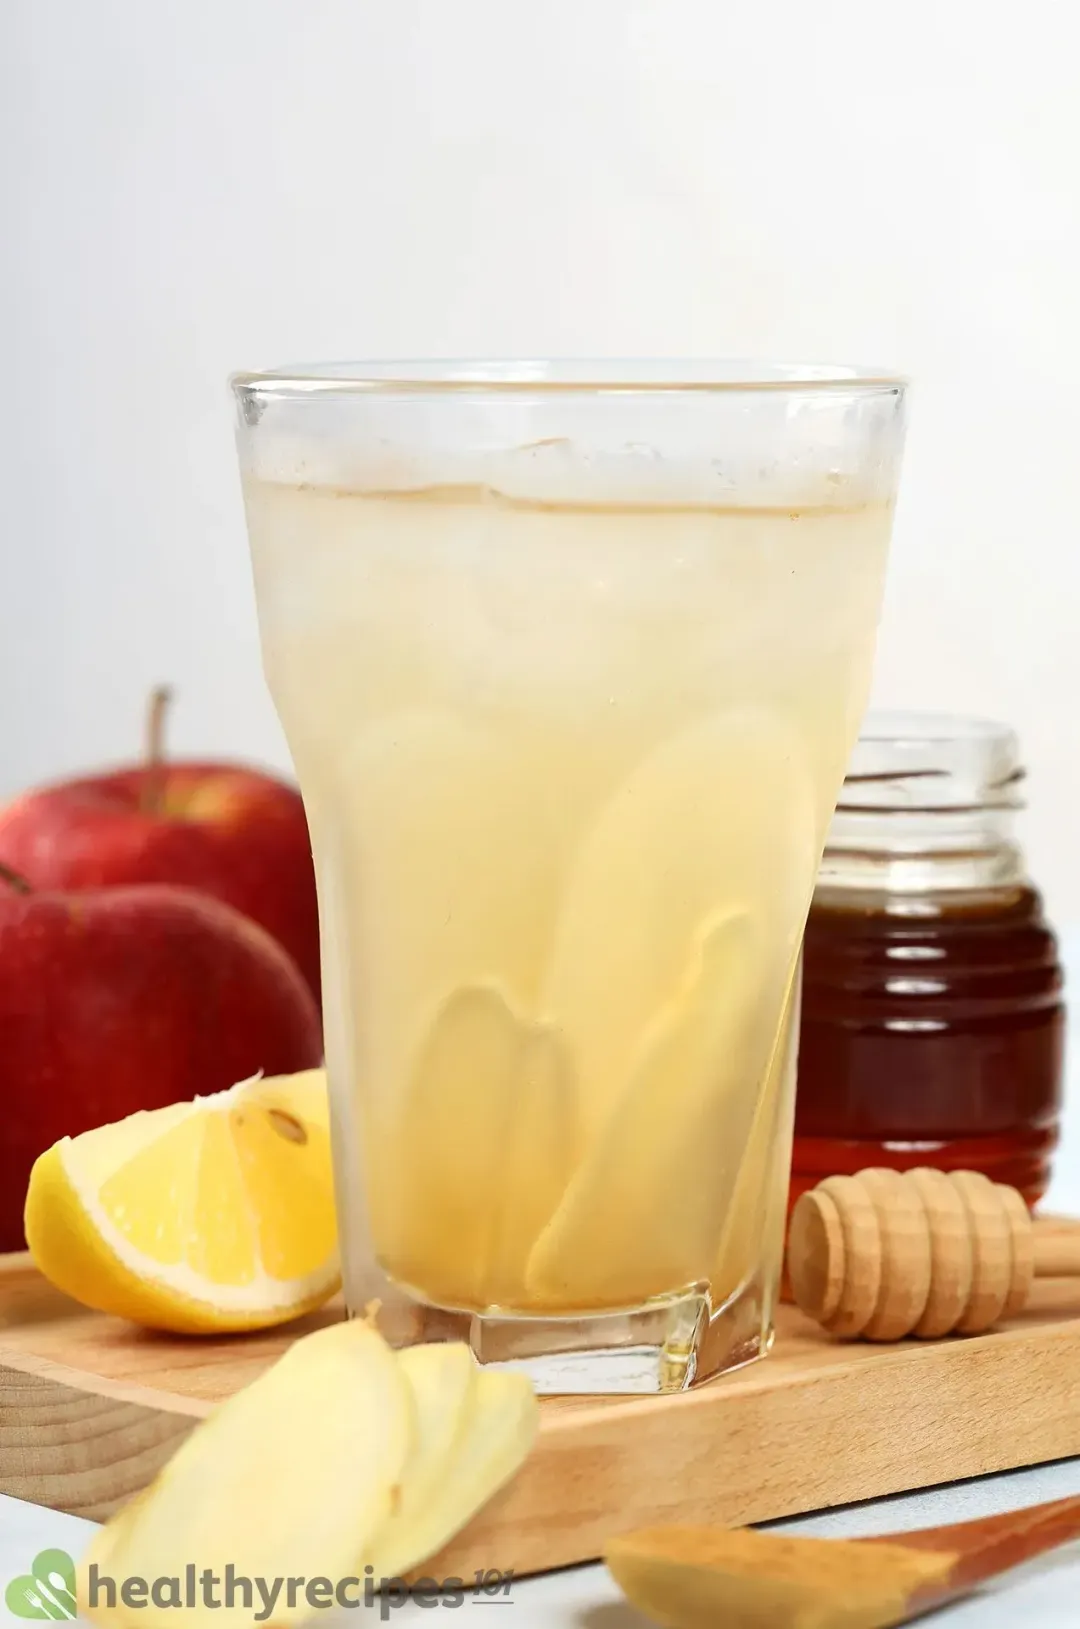 A large glass of apple cider vinegar drink filled with ginger slices, next to ginger slices and a jar of honey